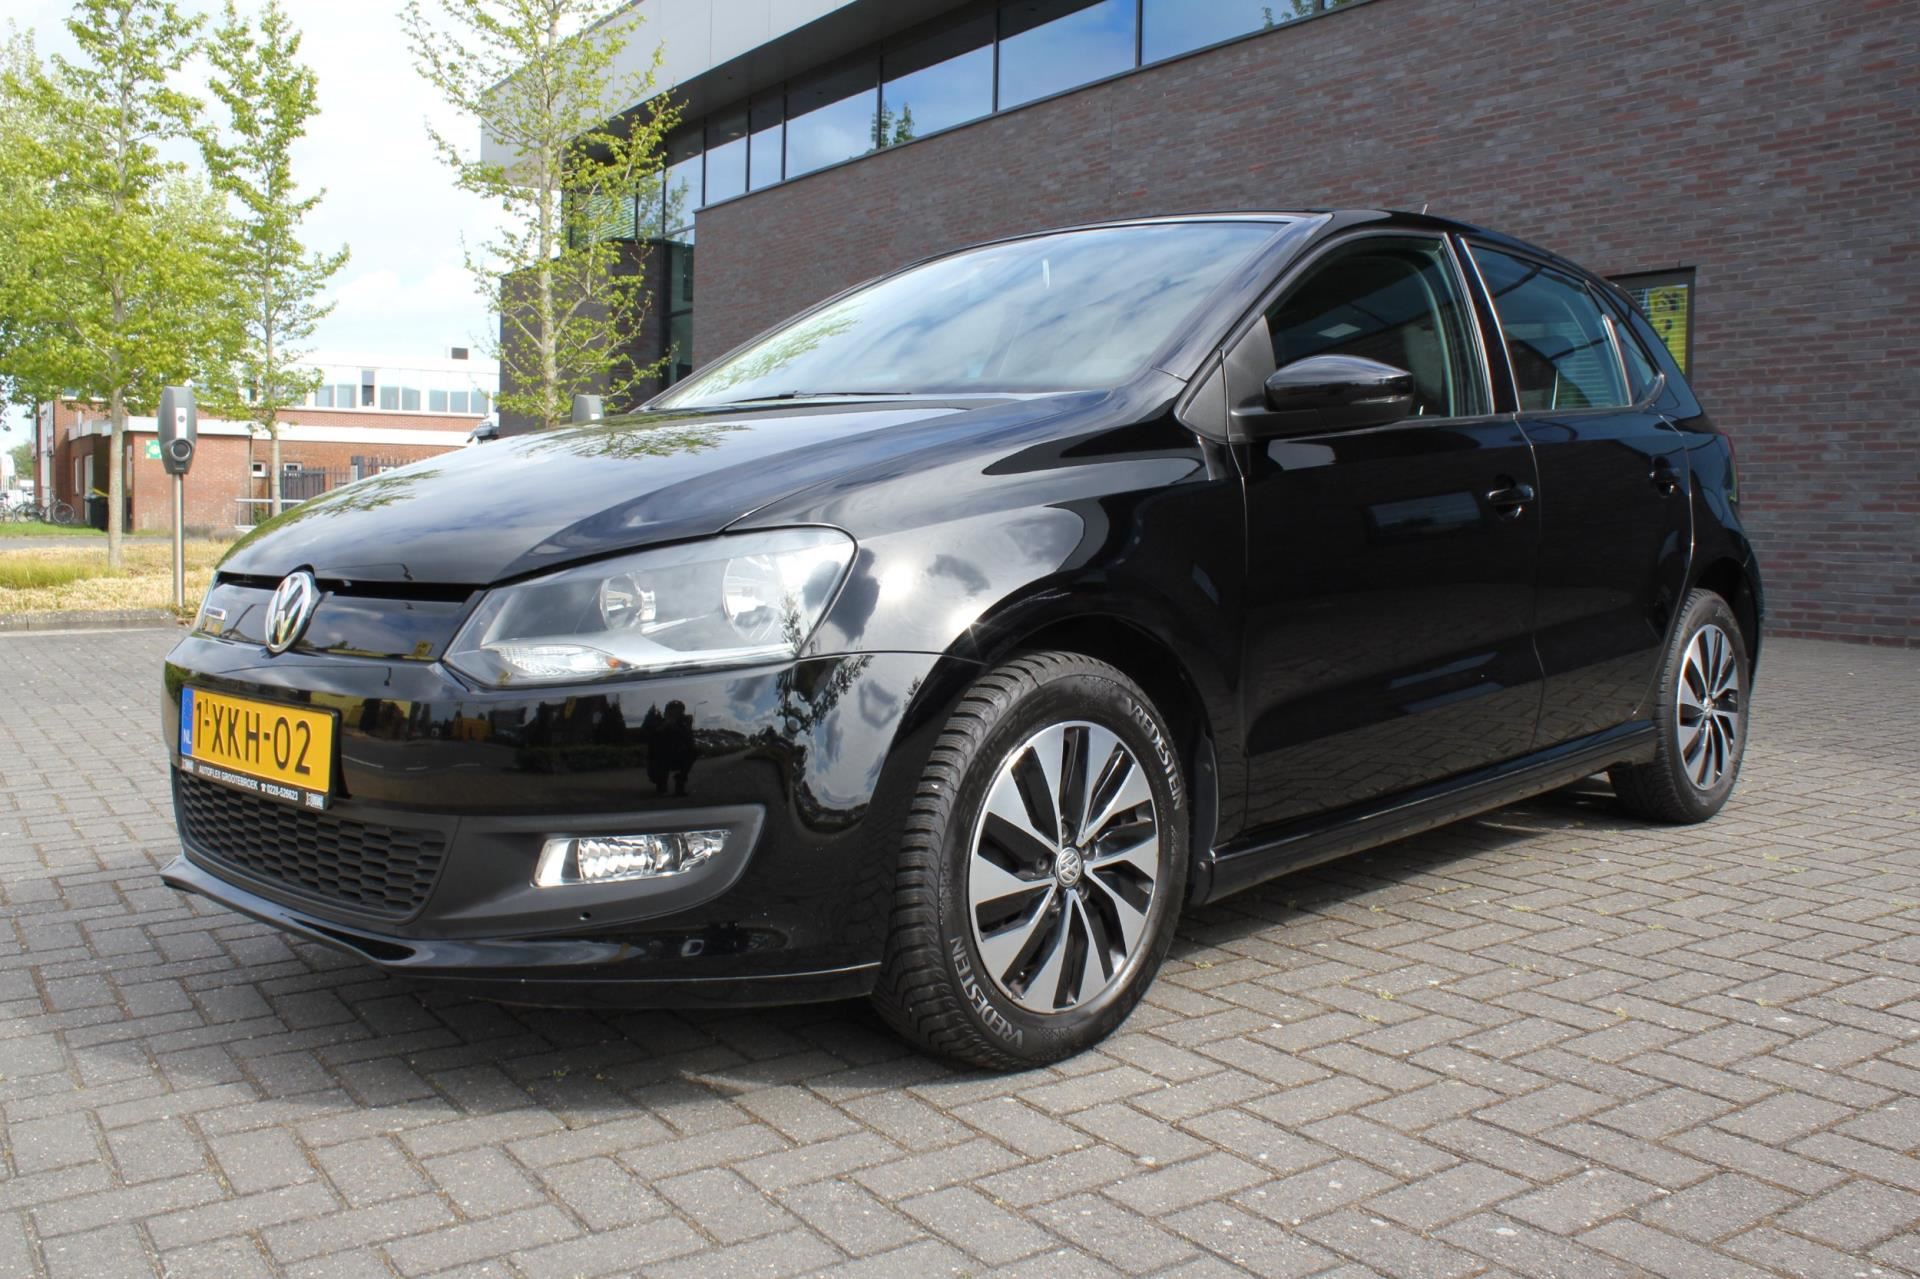 Donker worden Elektricien hardop Volkswagen Polo - 1.4 TDI BlueMotion Diesel uit 2014 - www.garageautoflex.nl